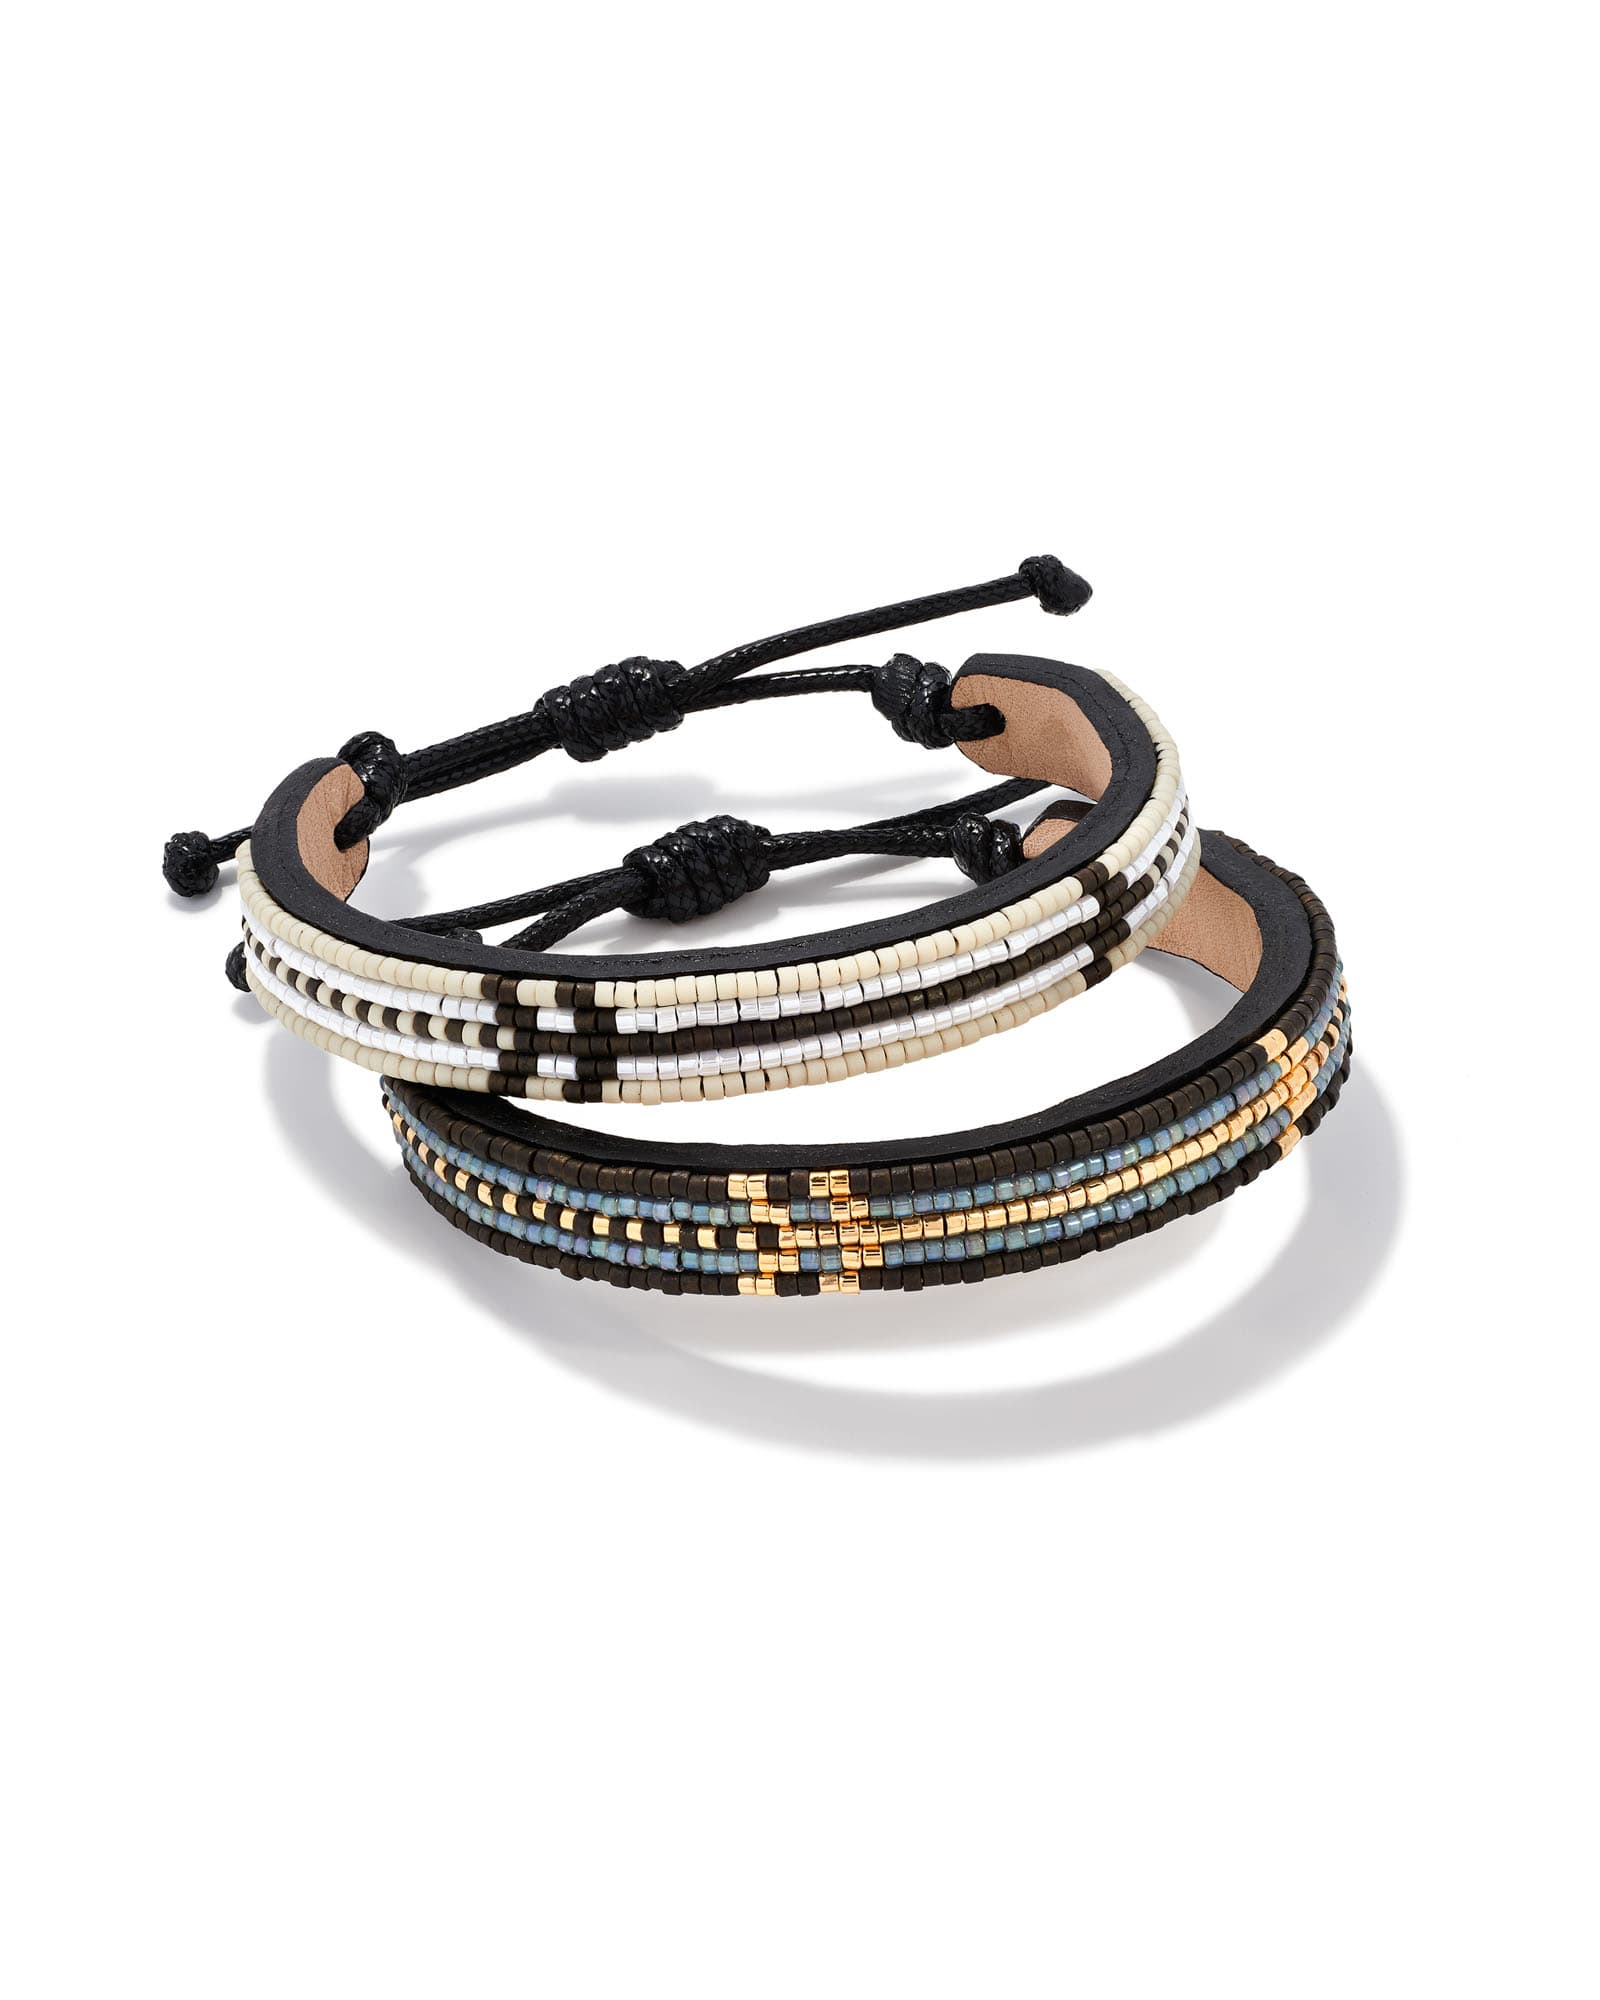 Kendra Scott Shawn Beaded Friendship Bracelets Set of 2 in Charcoal Mix | Miyuki Delica Beads/Leather